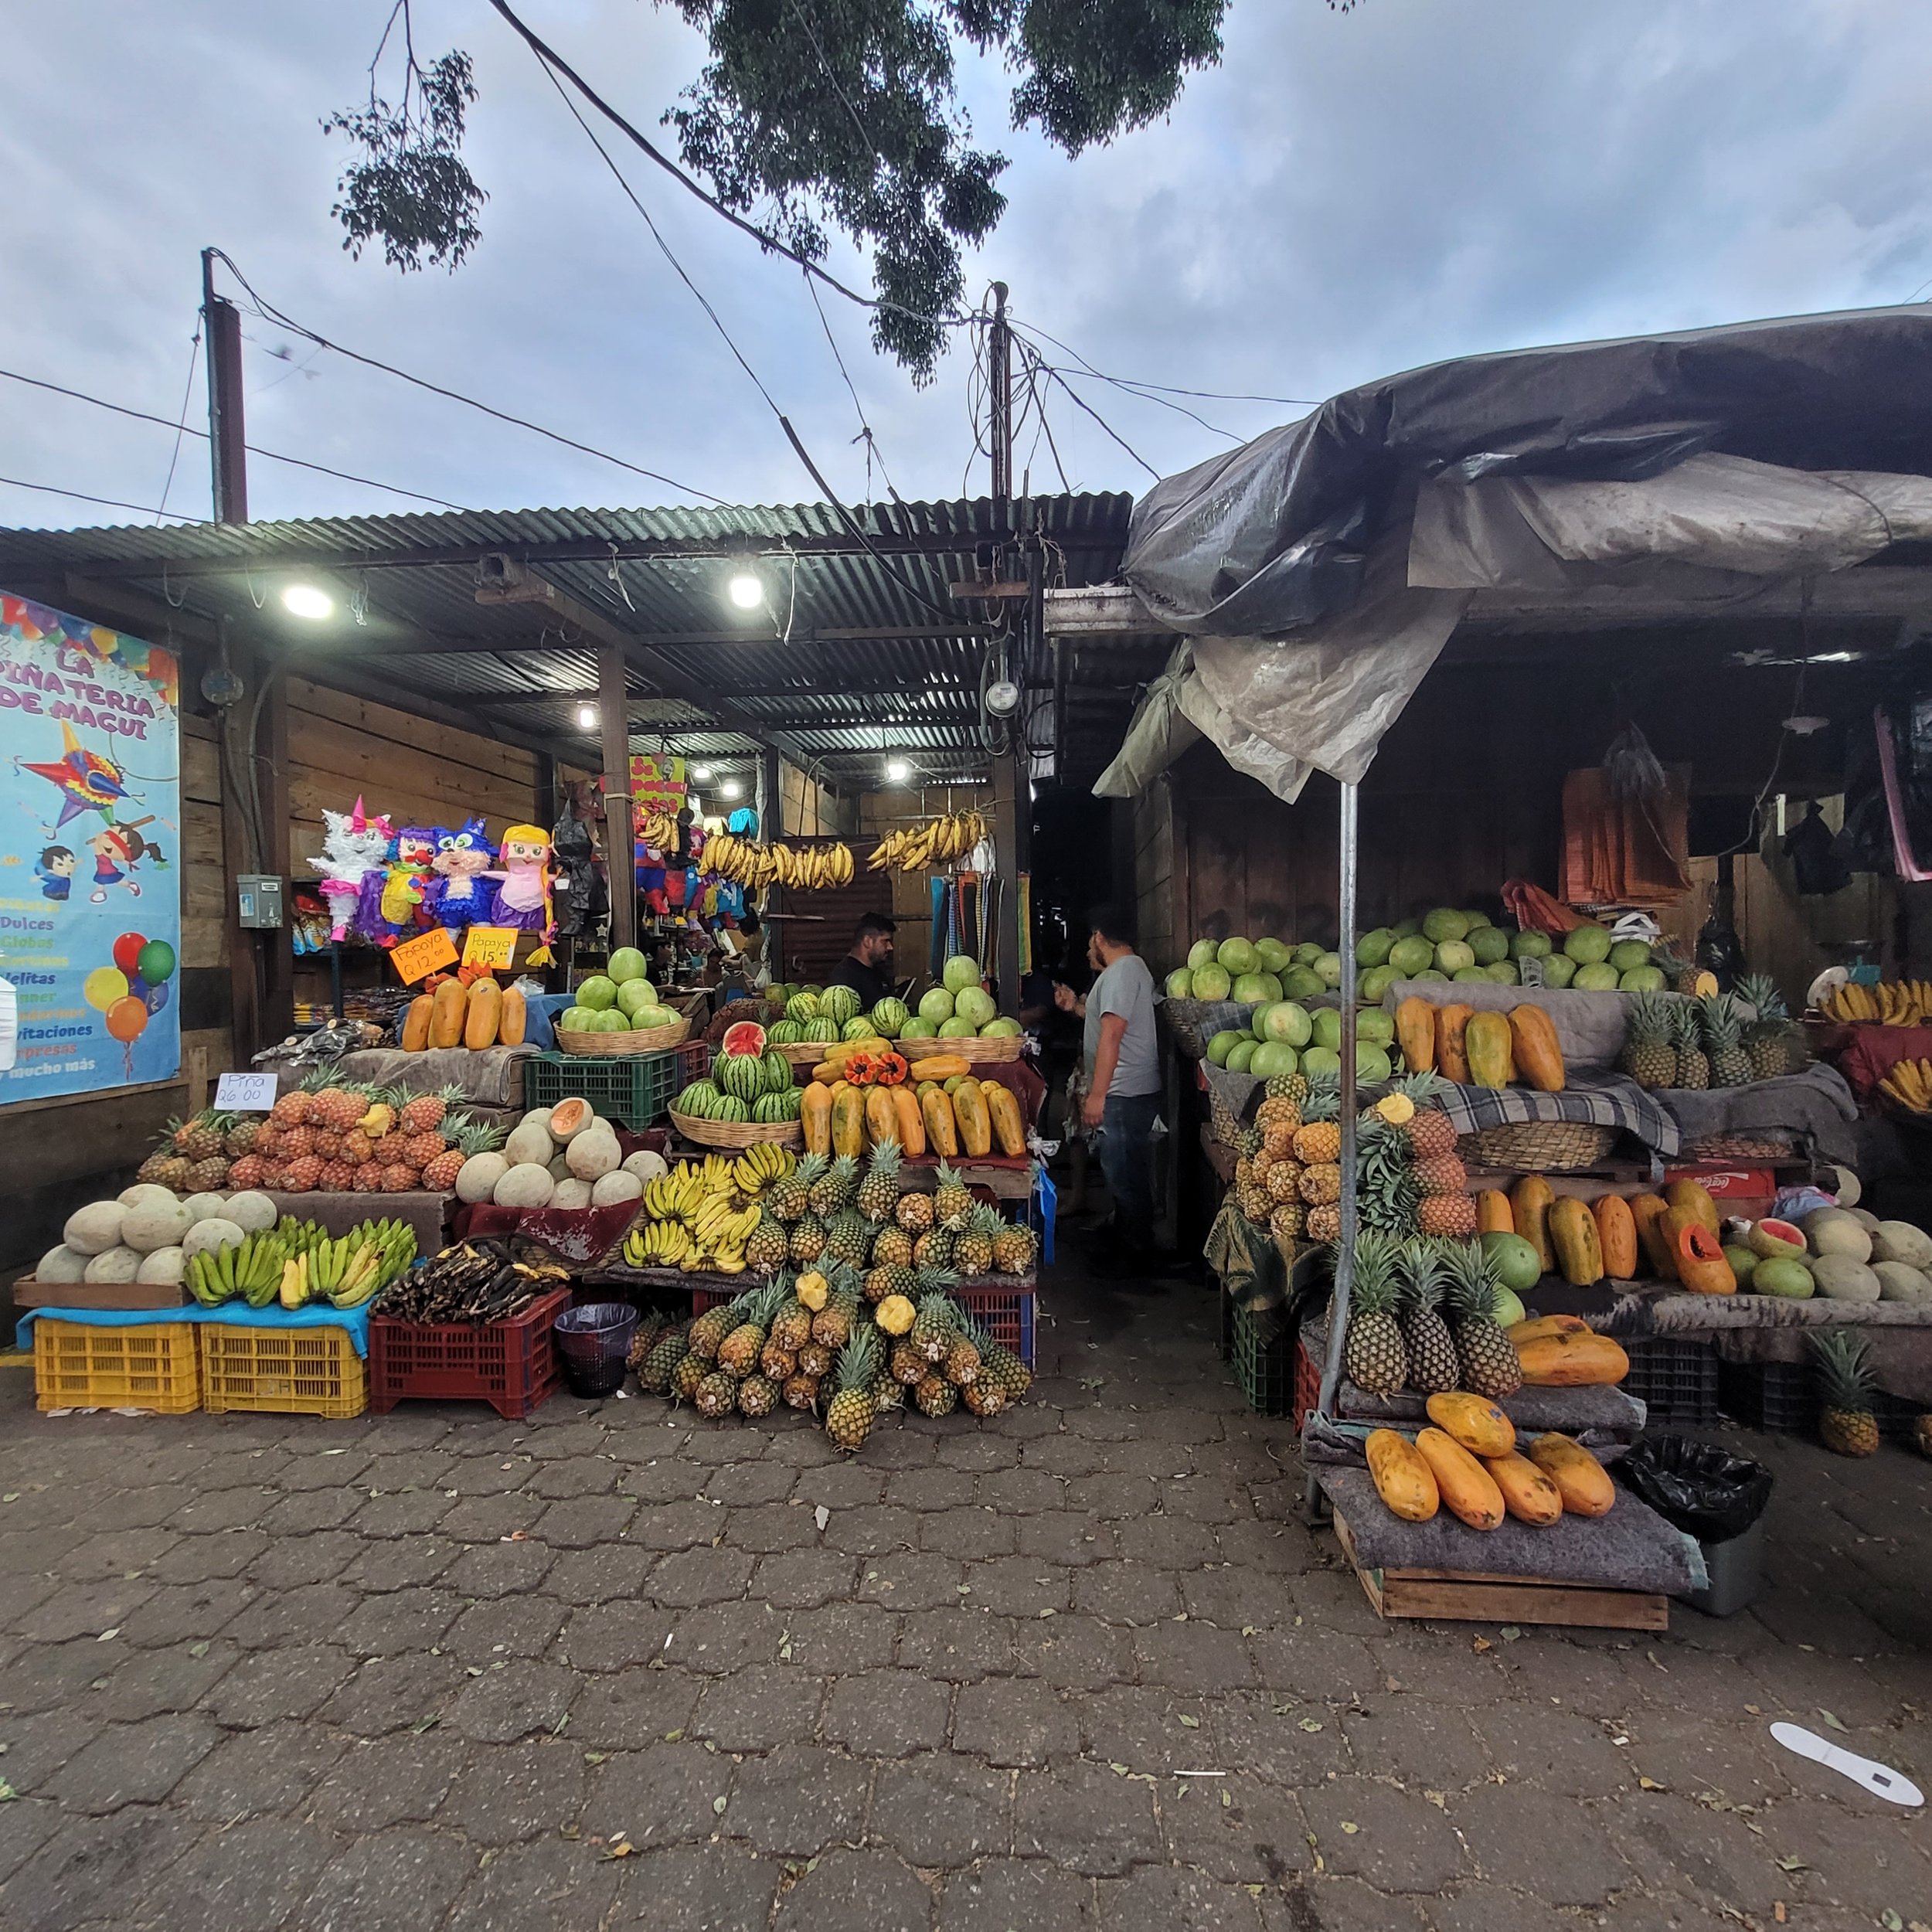 Family_trip_Guate_markets.jpg